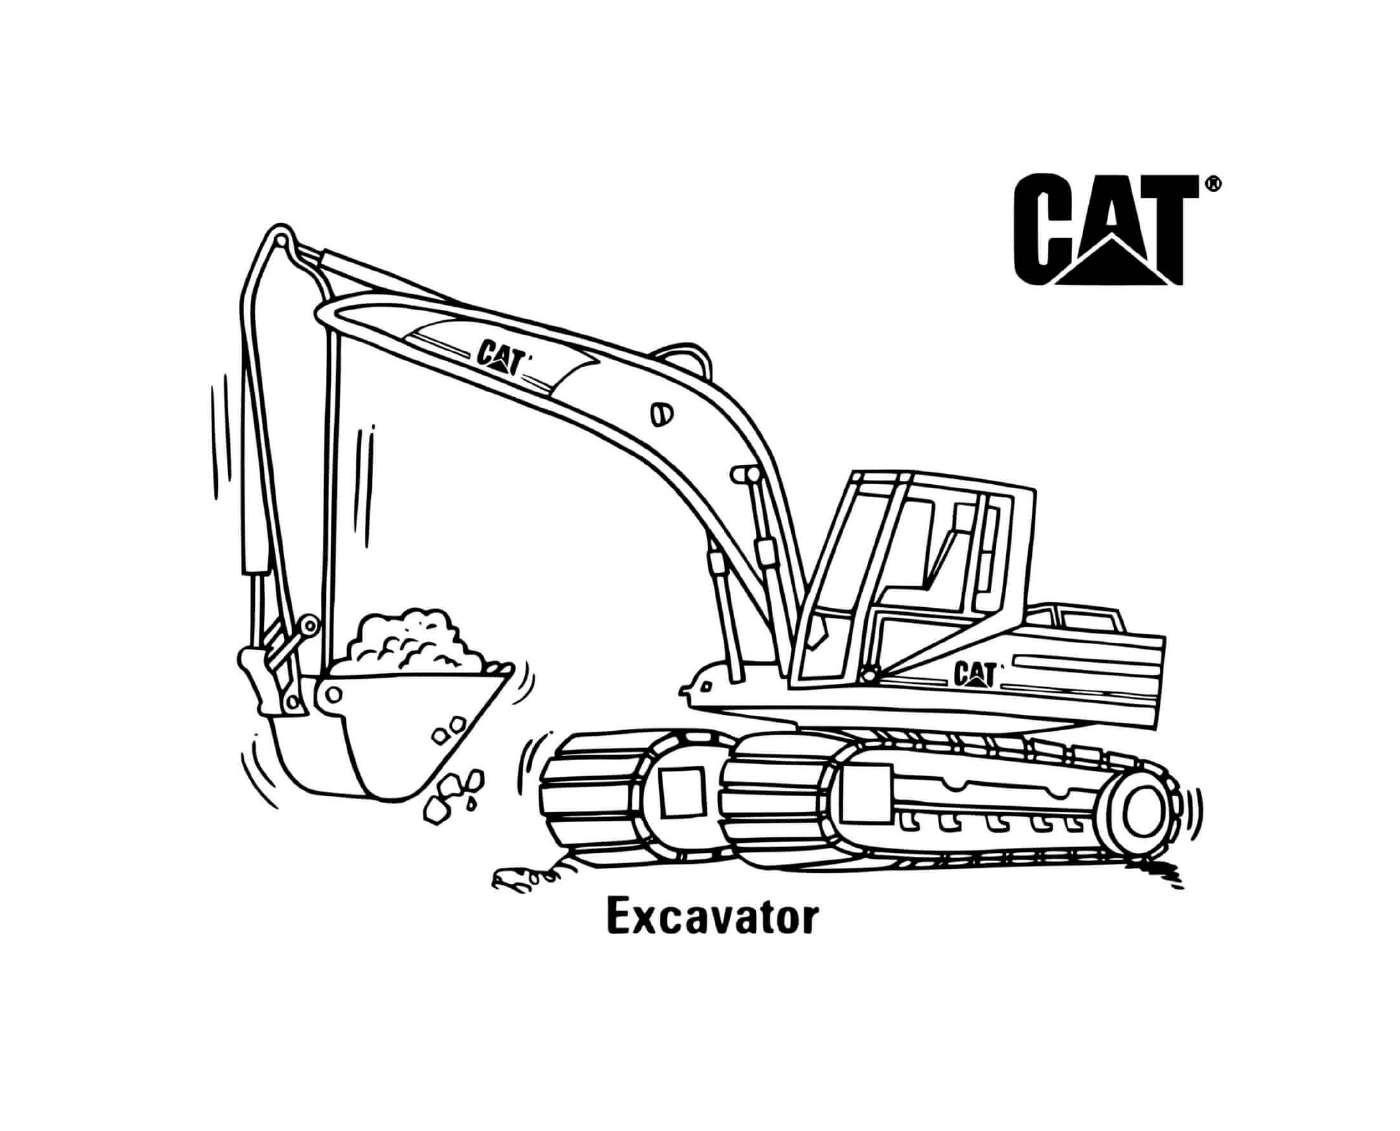  CAT excavator truck used for excavation 